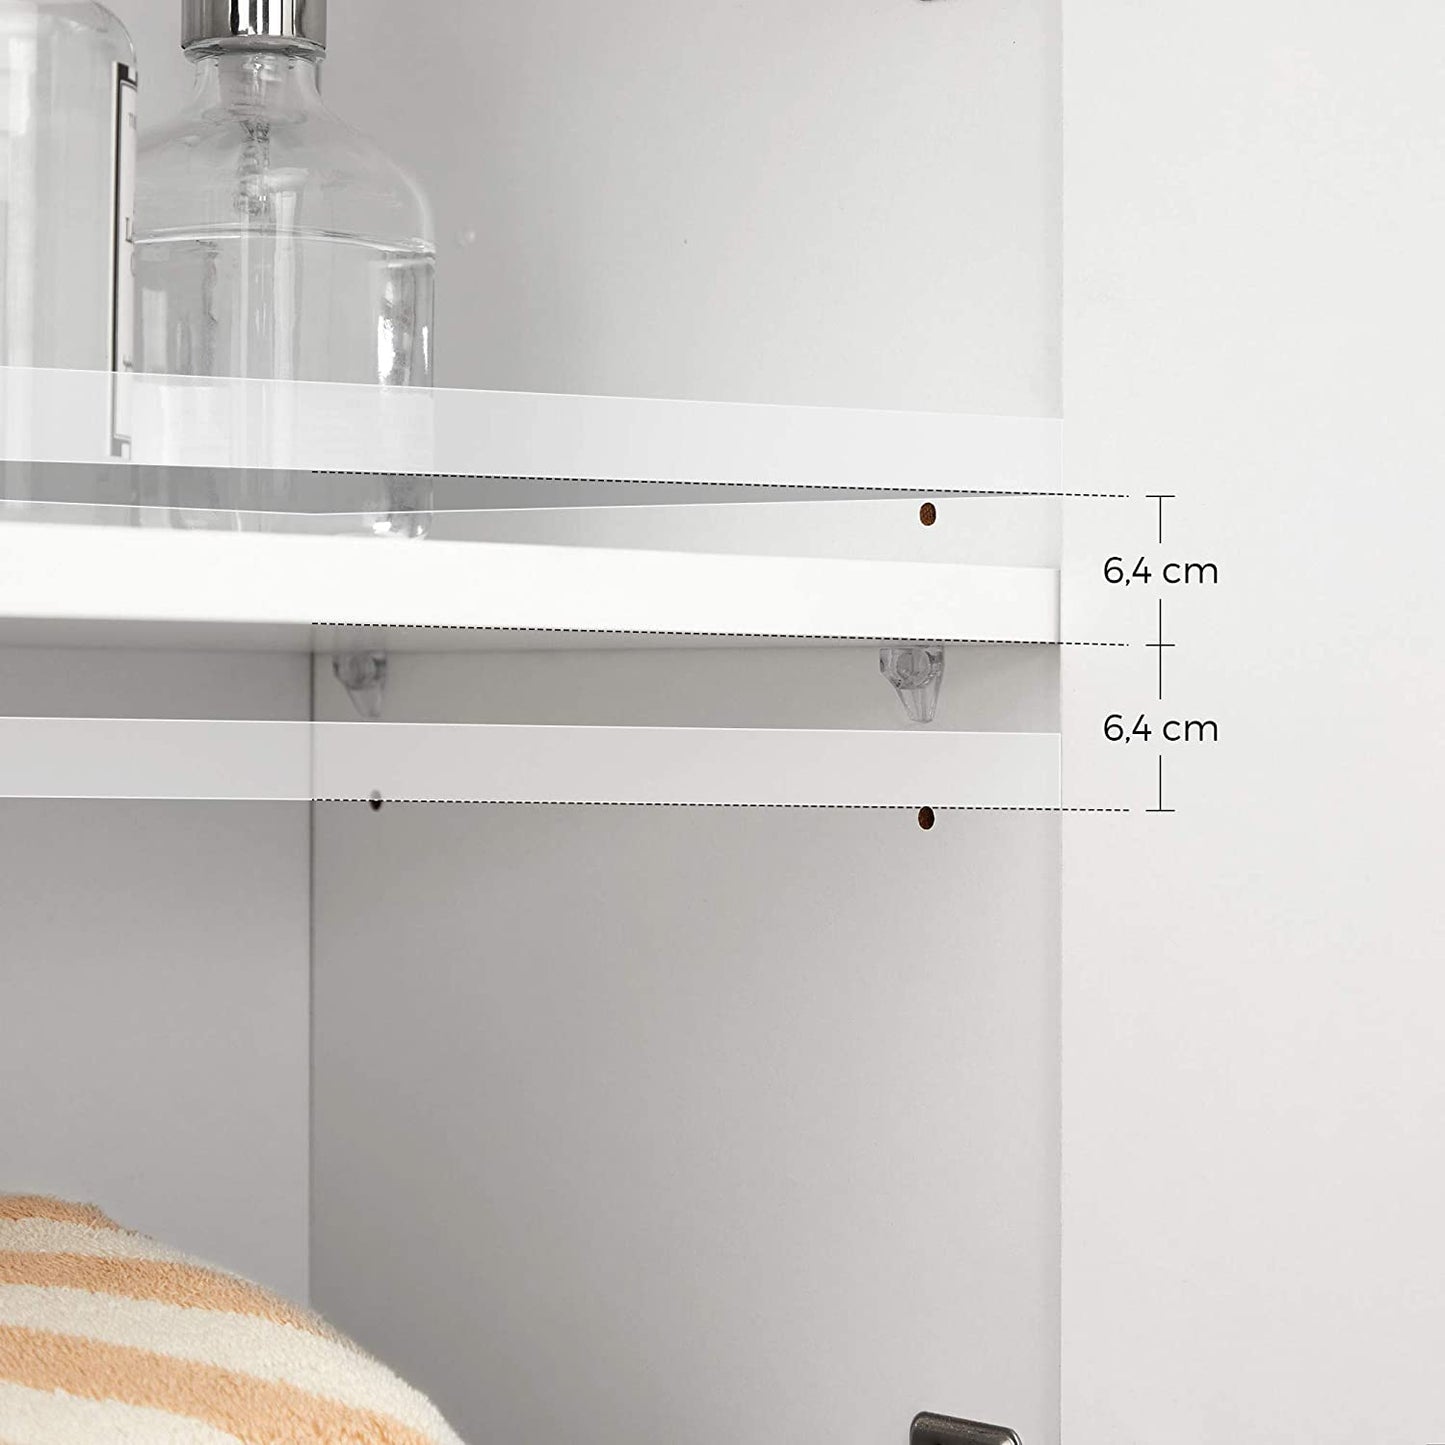 Nancy's Bradley Bathroom Cabinet - Storage Cabinet - Sideboard - French Doors - Drawer - White - MDF - 60 x 30 x 80 cm